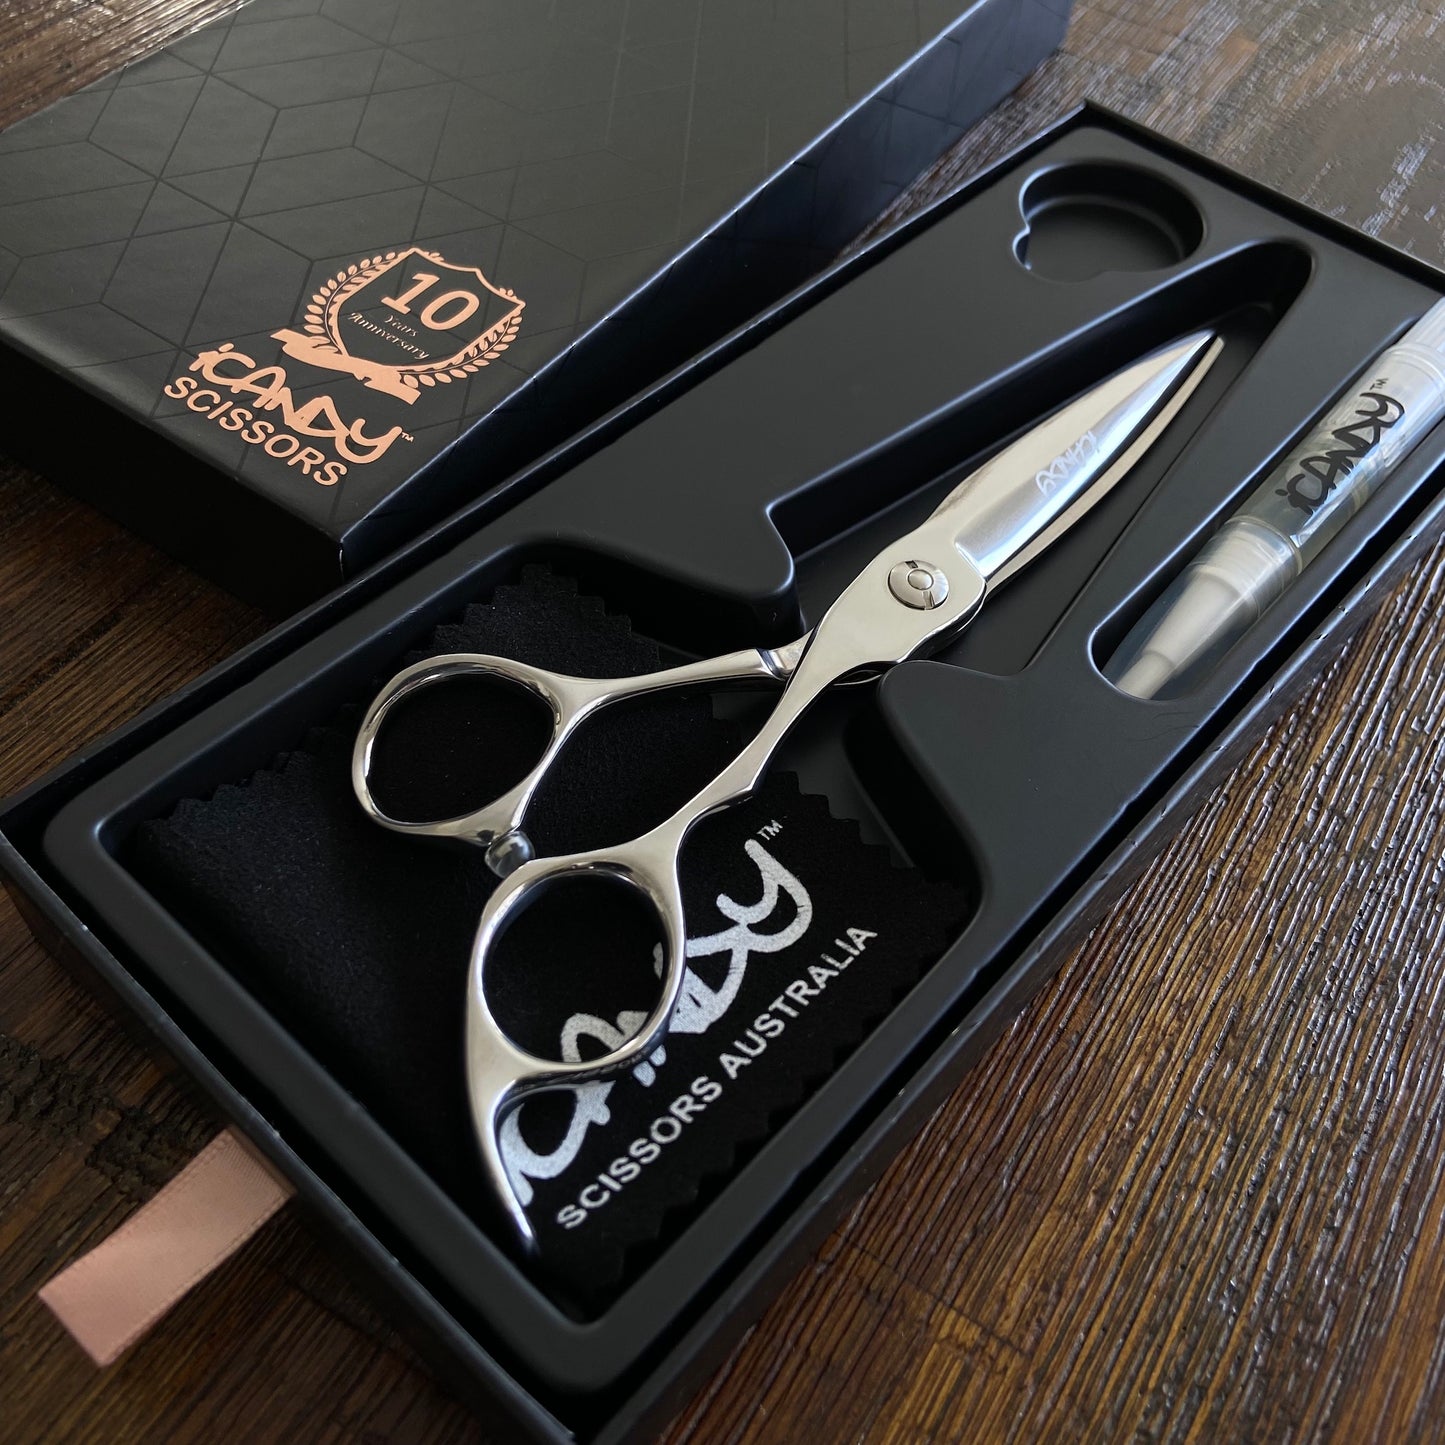 iCandy SLIDER VG10 Scissors (6.5 inch) In Box 